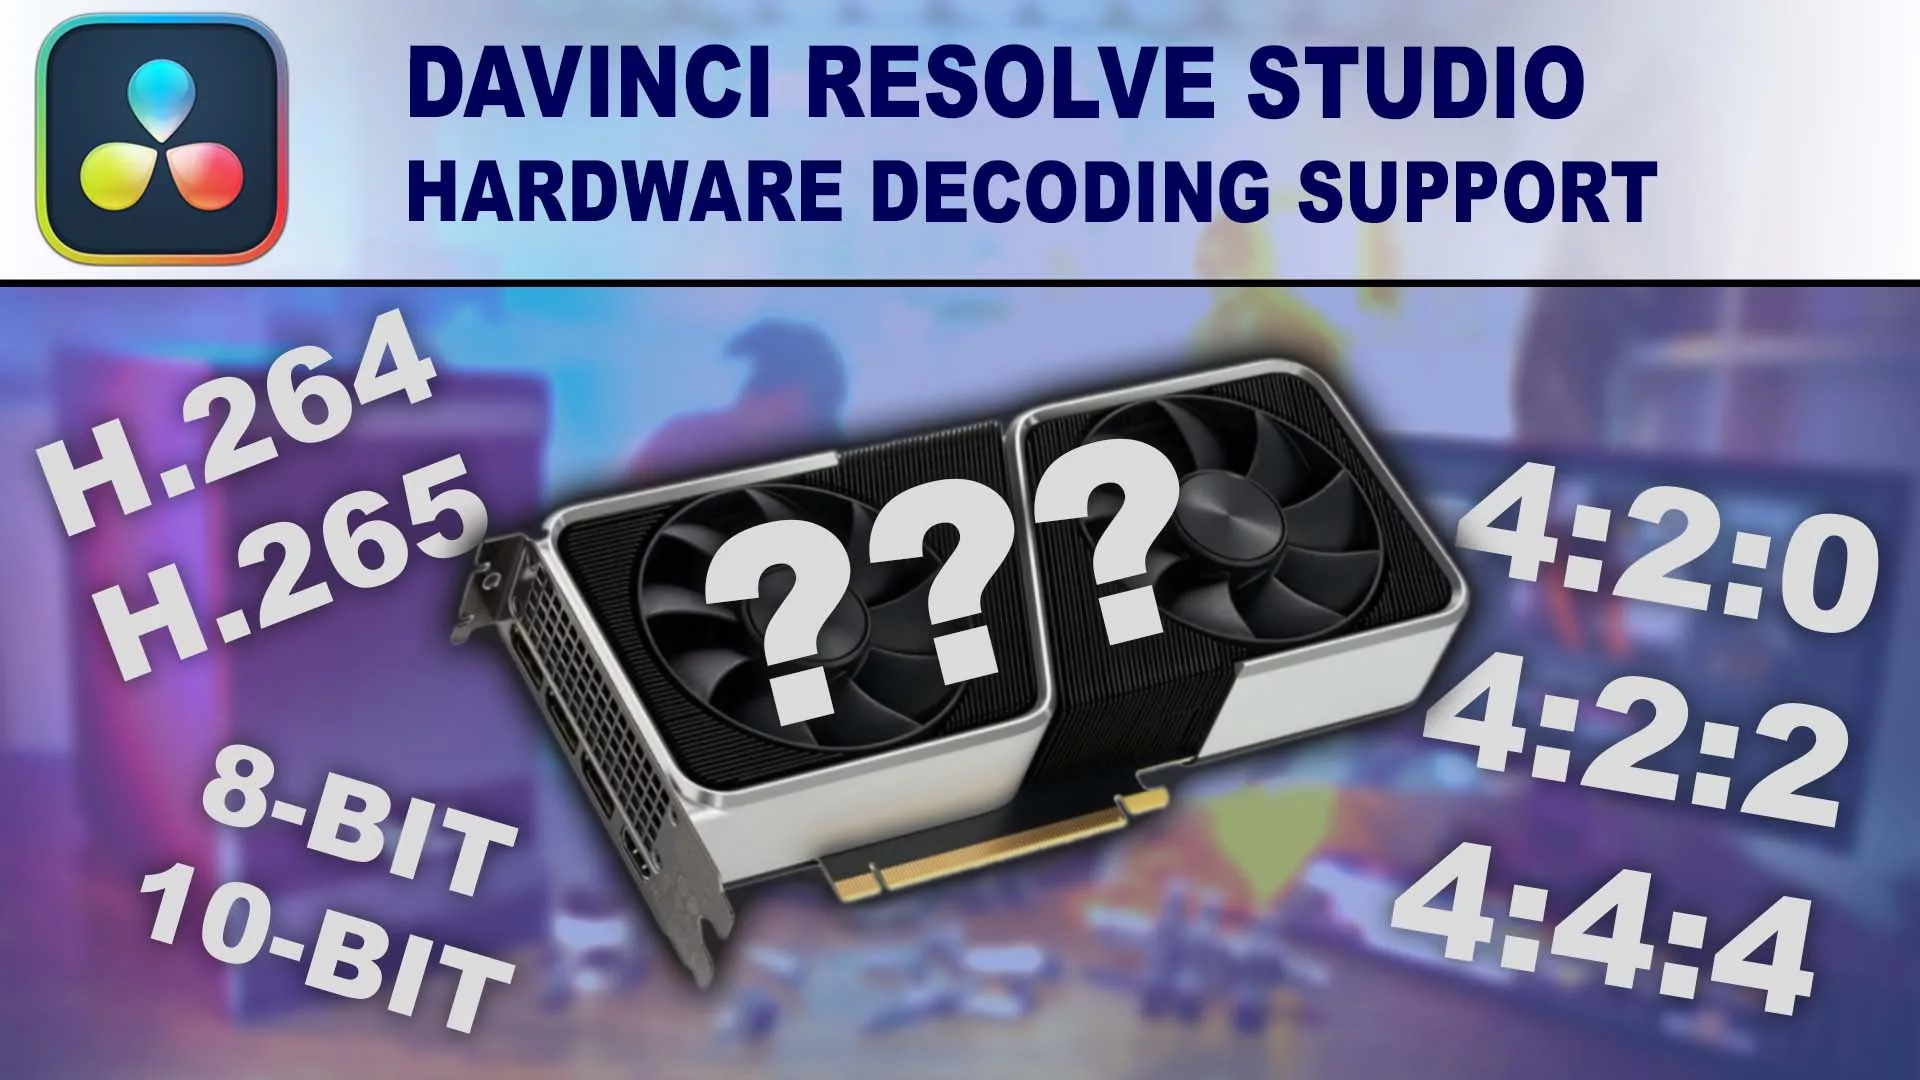 DaVinci Resolve Studio hardware decoding support